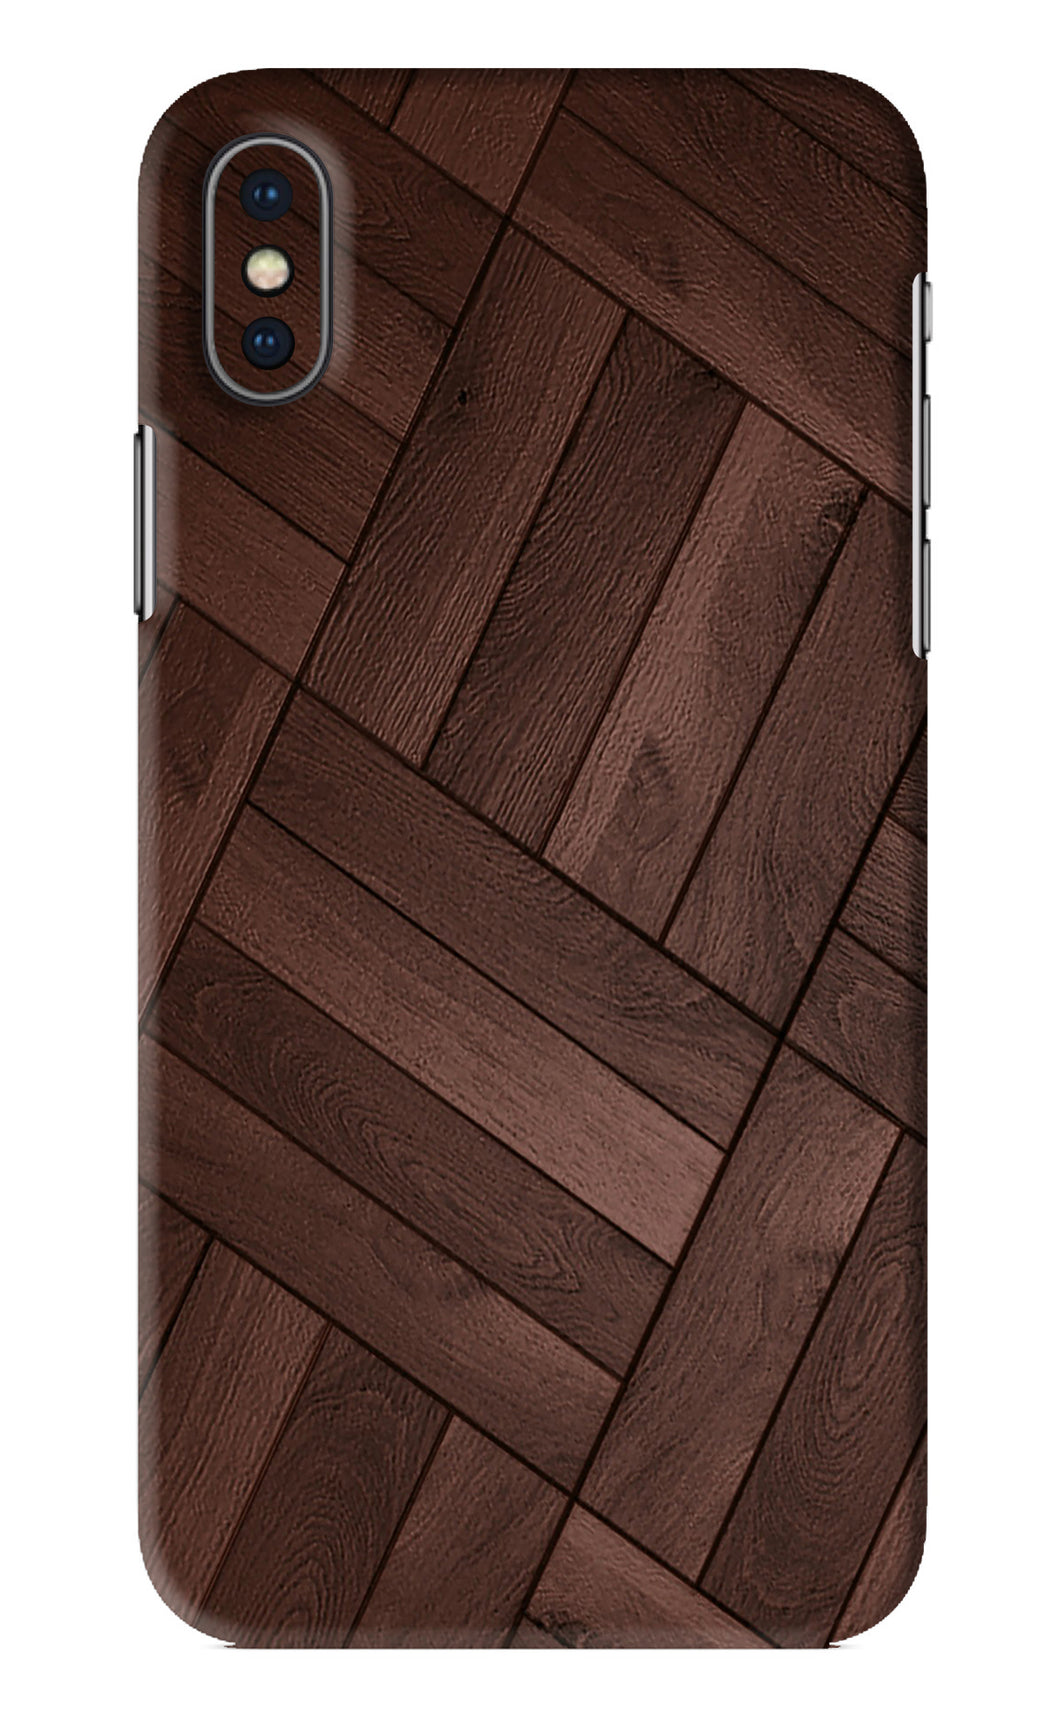 Wooden Texture Design iPhone XS Back Skin Wrap